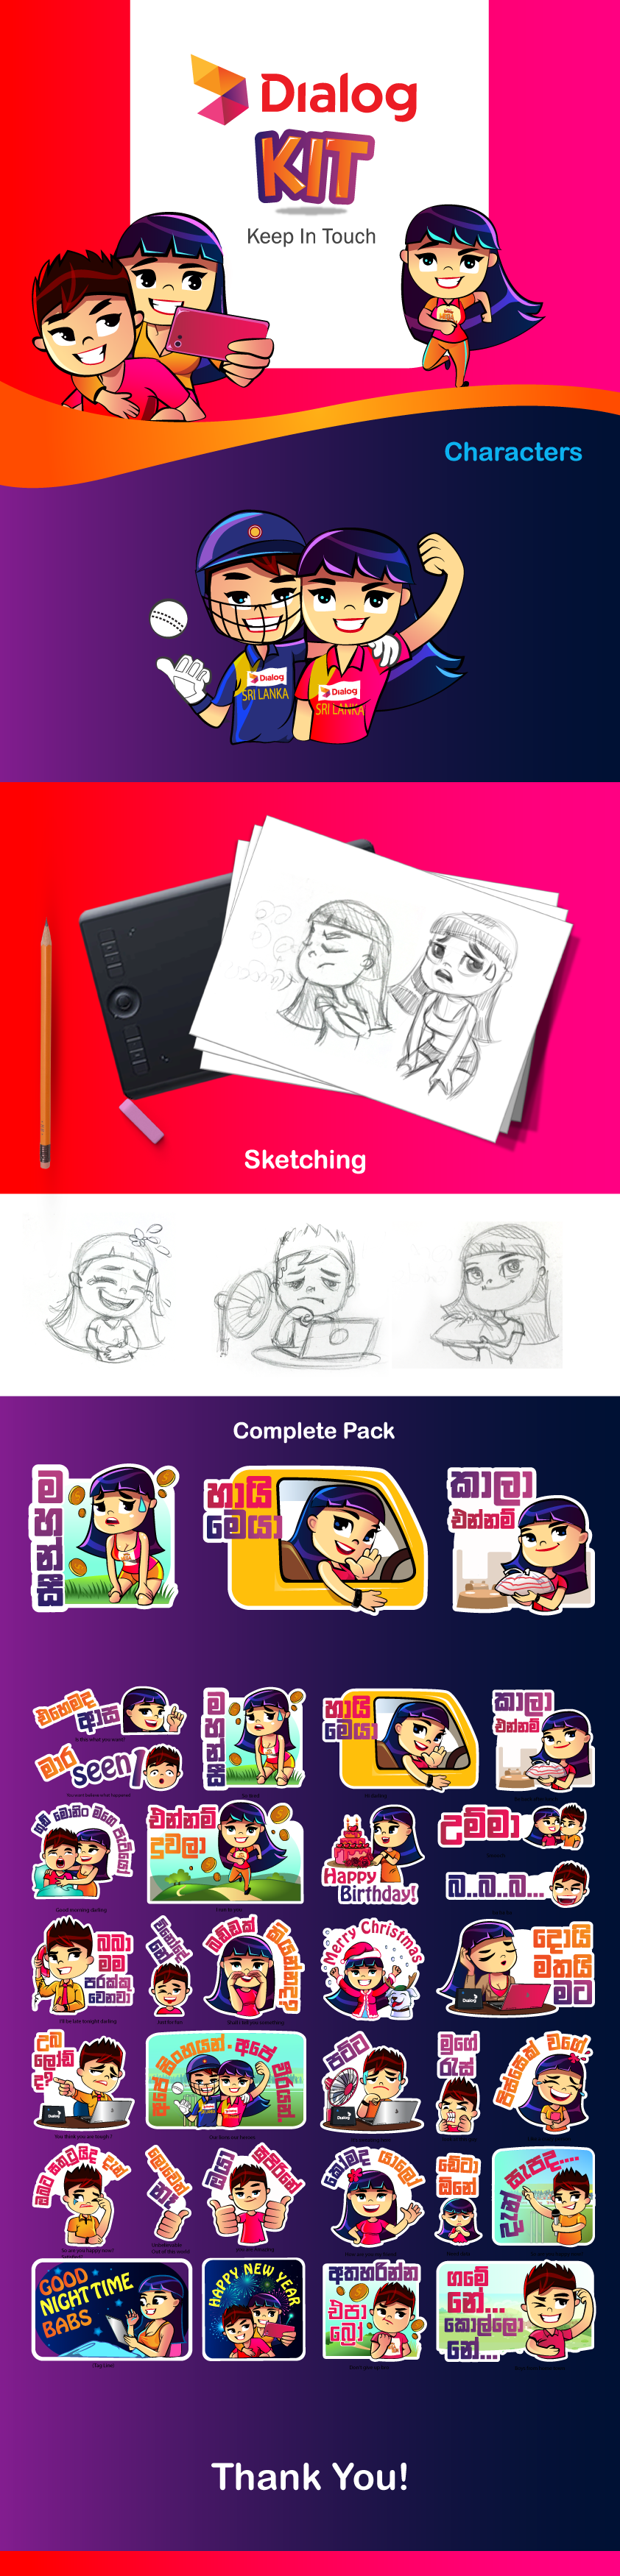 viber sitickers ILLUSTRATION  cartoon Drawing  graphic design  branding  Illustrator arts Sticker Design Sri lanka